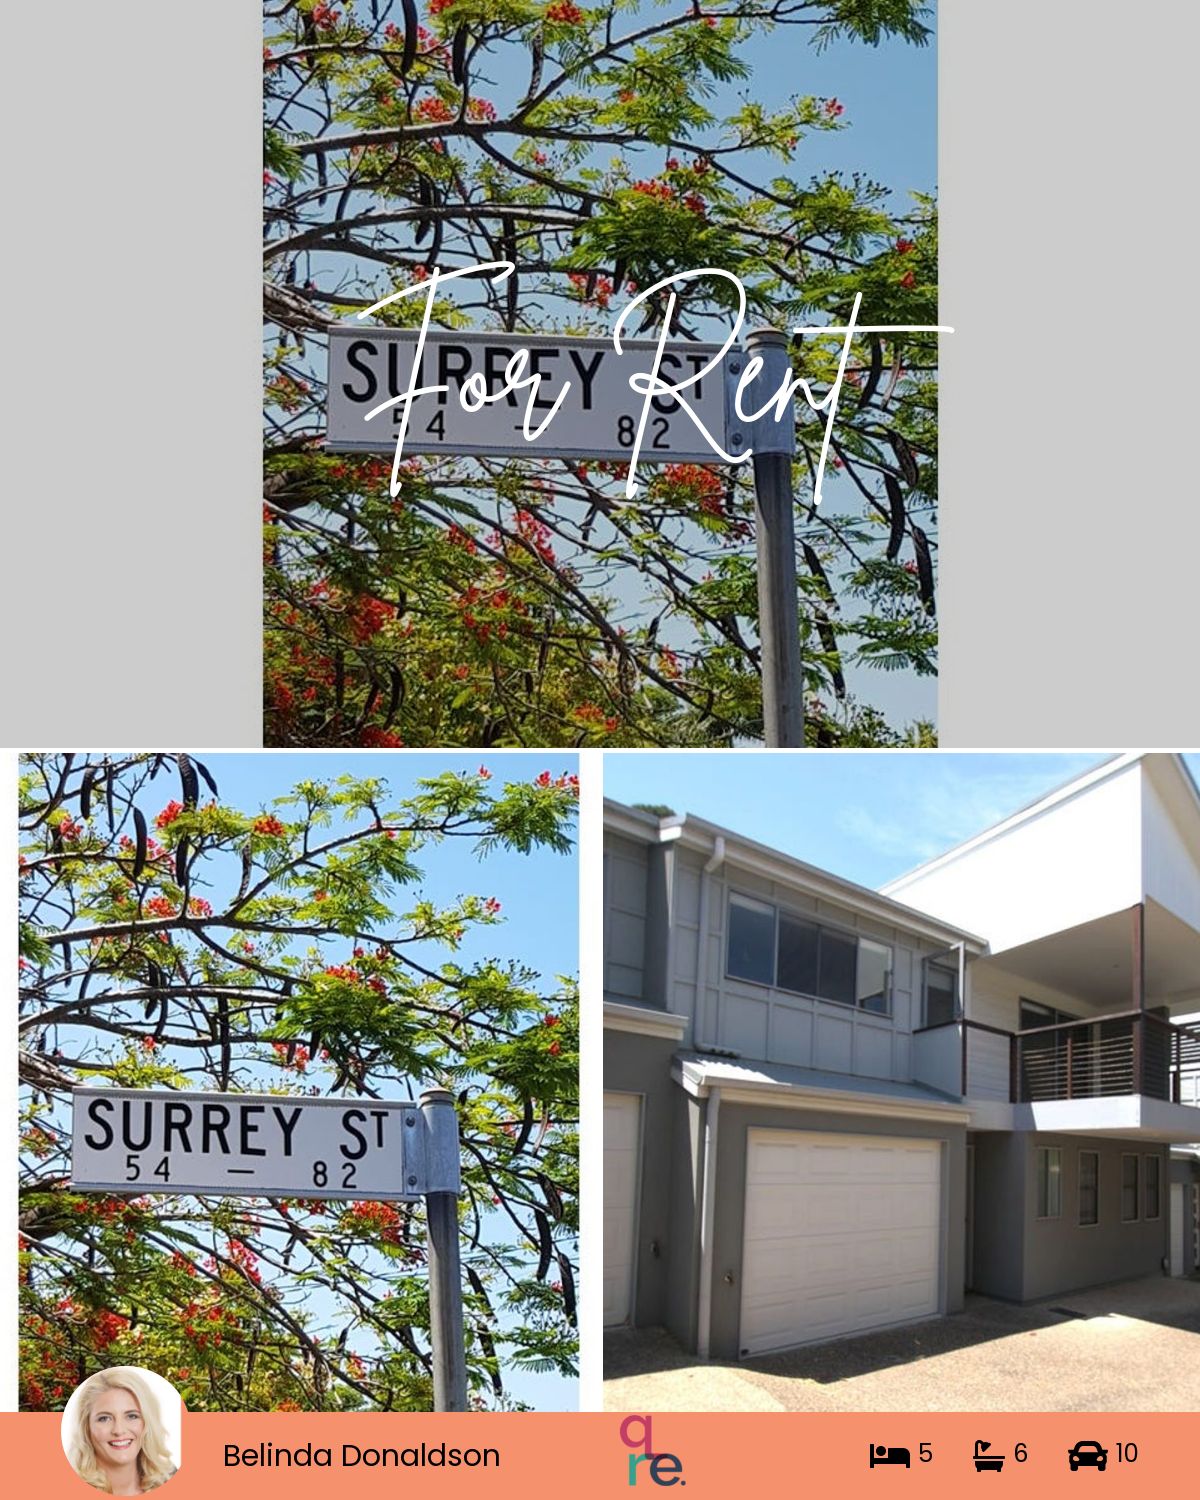 2/54 Surrey Street, Nundah, QLD 4012 | Realty.com.au